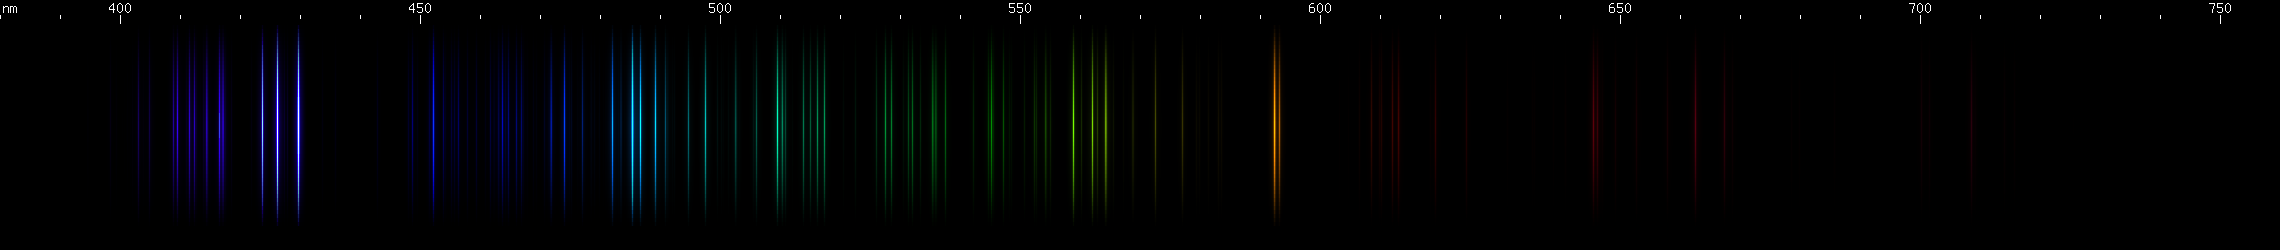 Spectral Lines of Technetium